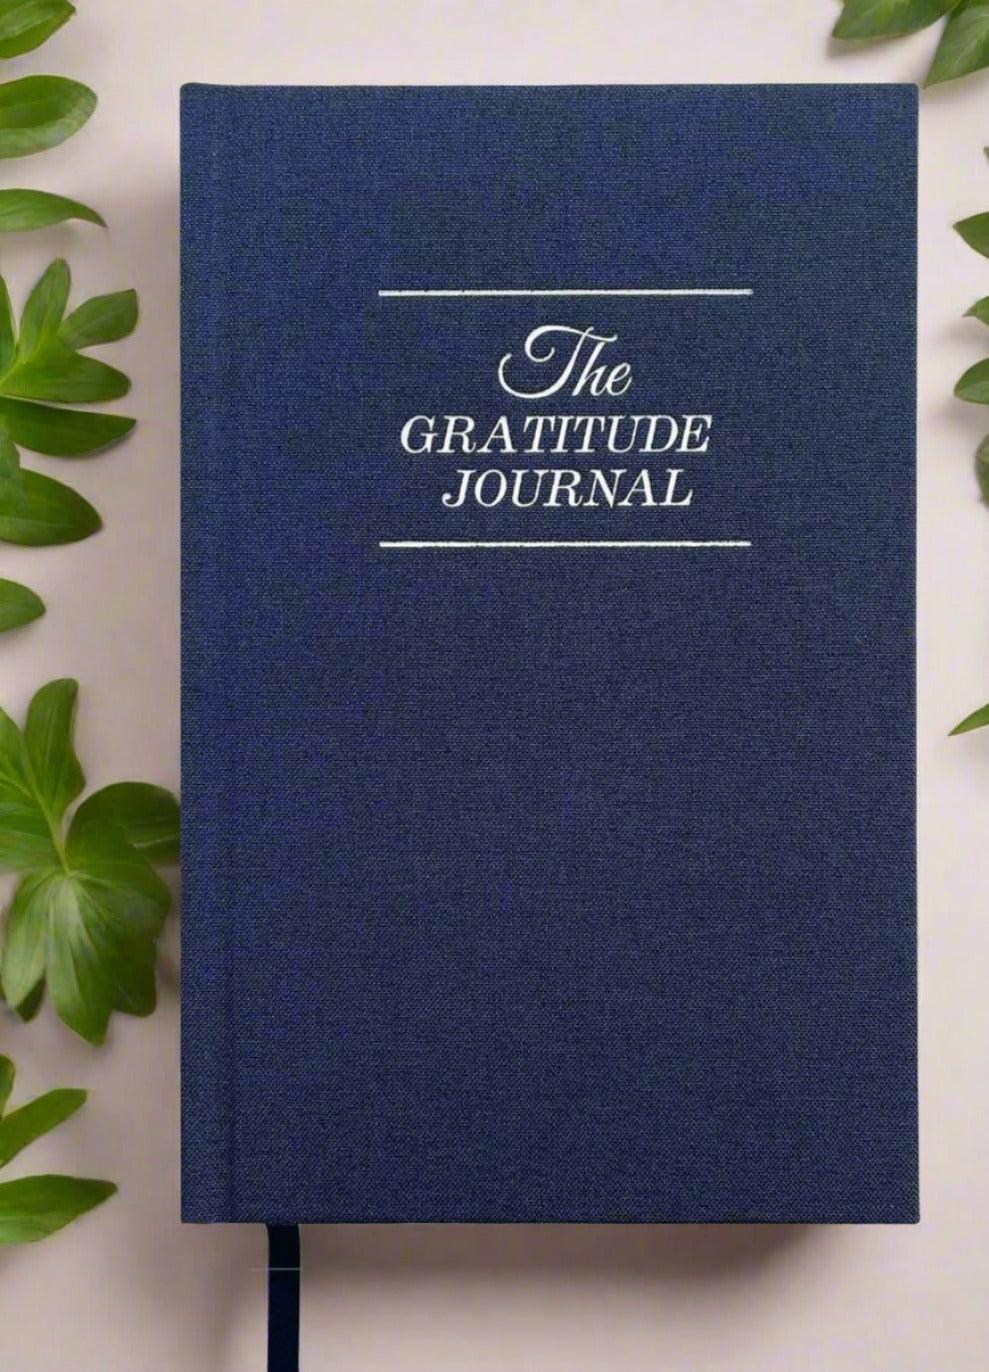 The Gratitude Journal - Planner from Dear Cece - Just £19.99! Shop now at Dear Cece